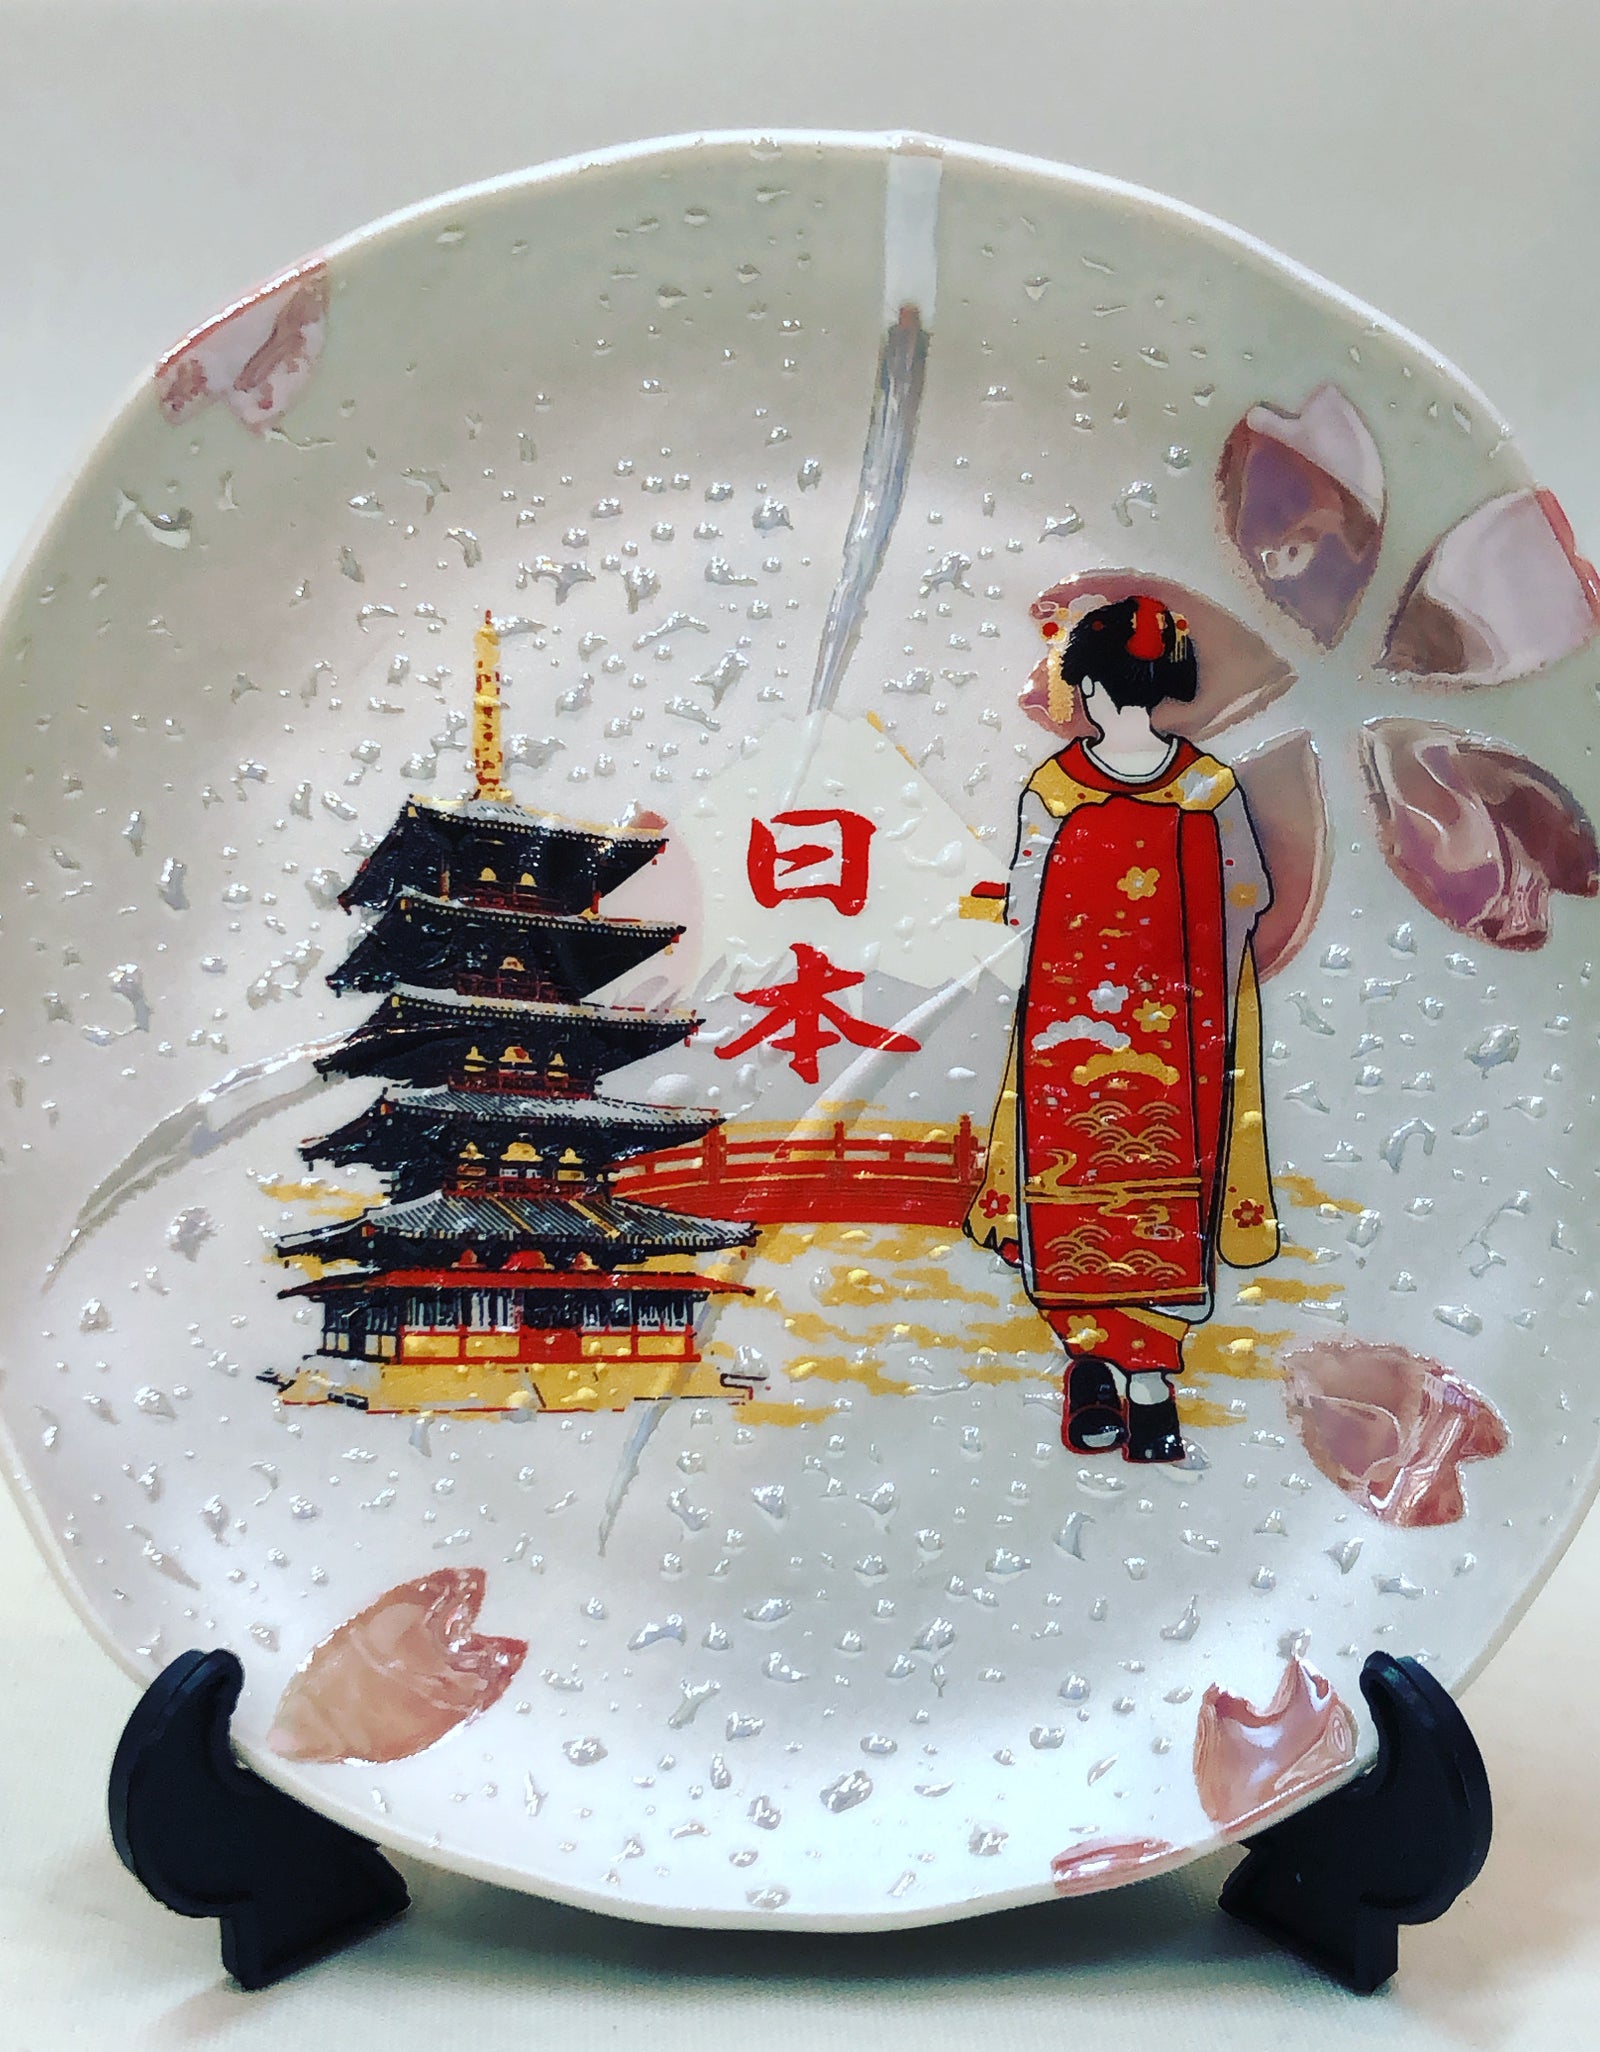 五膳箸 箸セット 日本 東京 JAPAN TOKYO SOURVENIR お土産 浮世絵 戦国